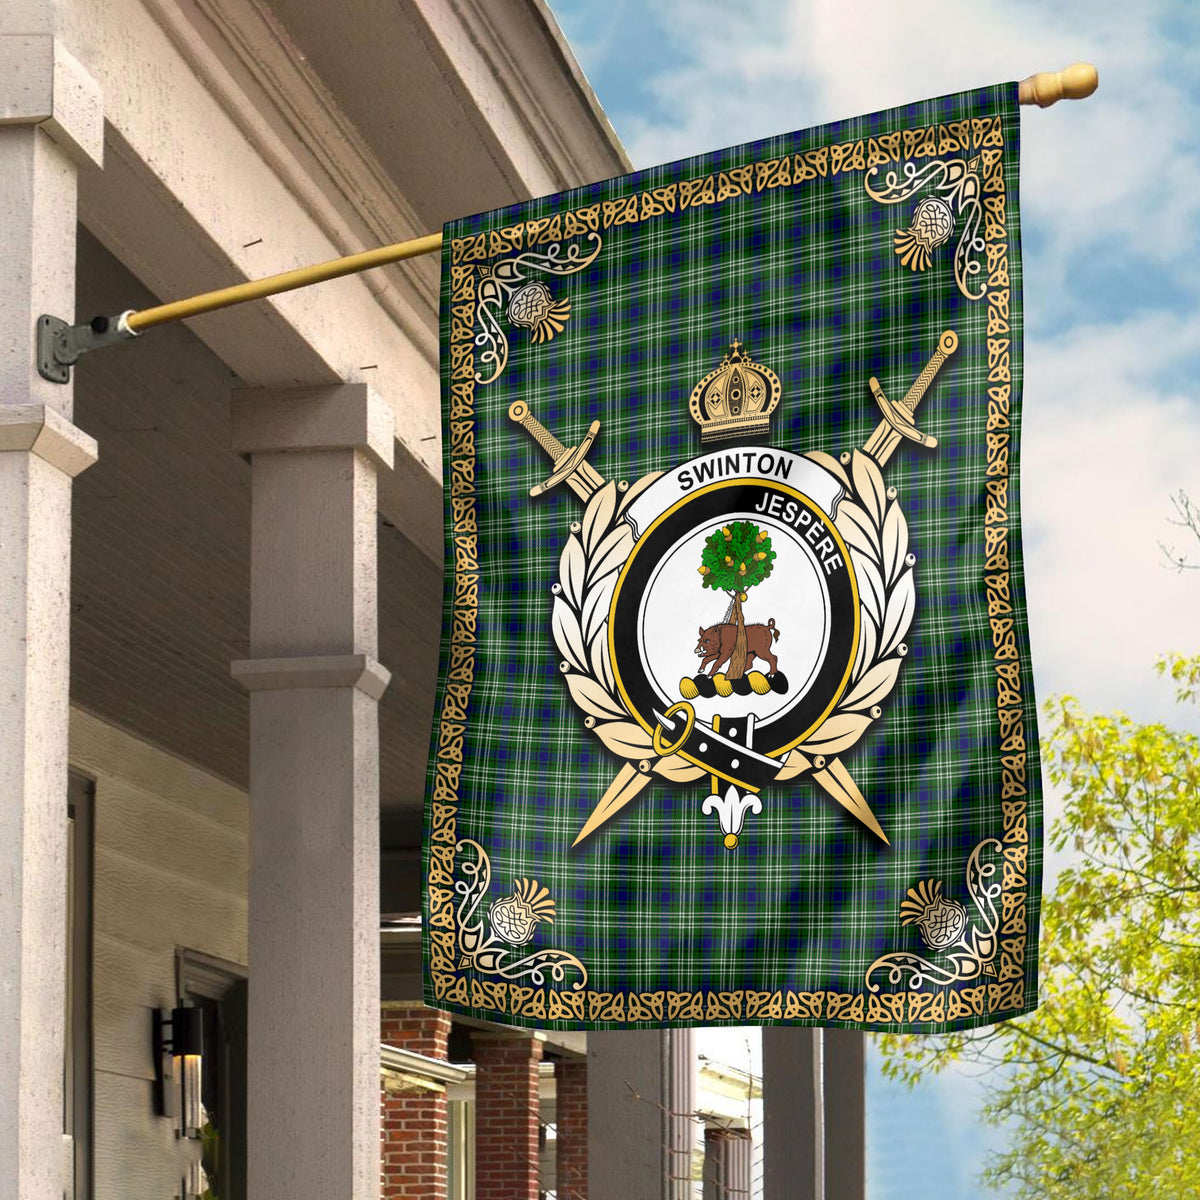 Swinton Tartan Crest Garden Flag - Celtic Thistle Style